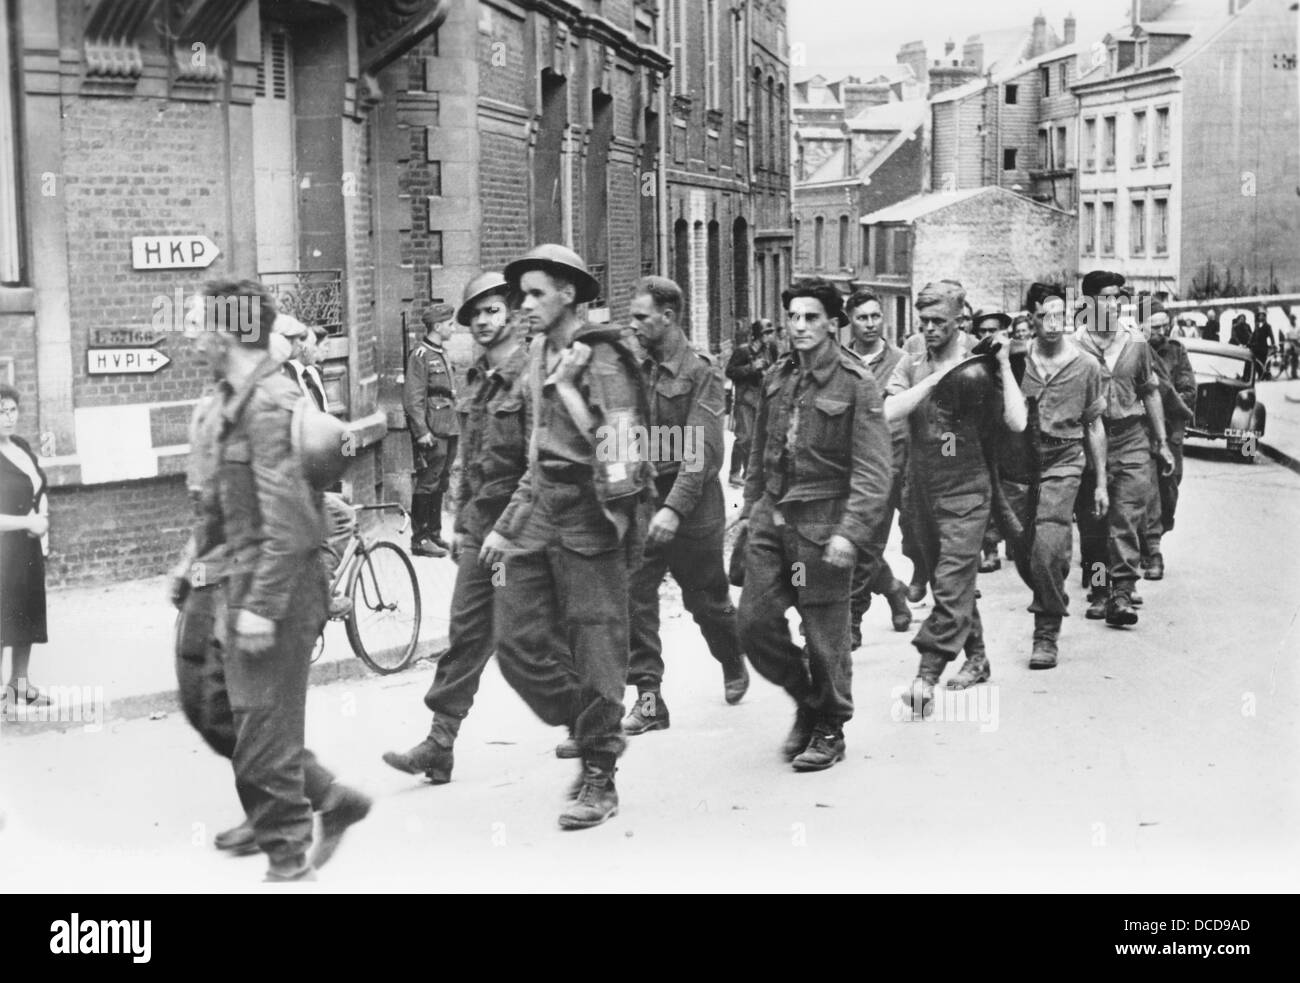 British soldiers who were taken prisoners of war by the German Wehrmacht are led through Dieppe in the occupied northern parts of France in August 1942. Fotoarchiv für Zeitgeschichte Stock Photo